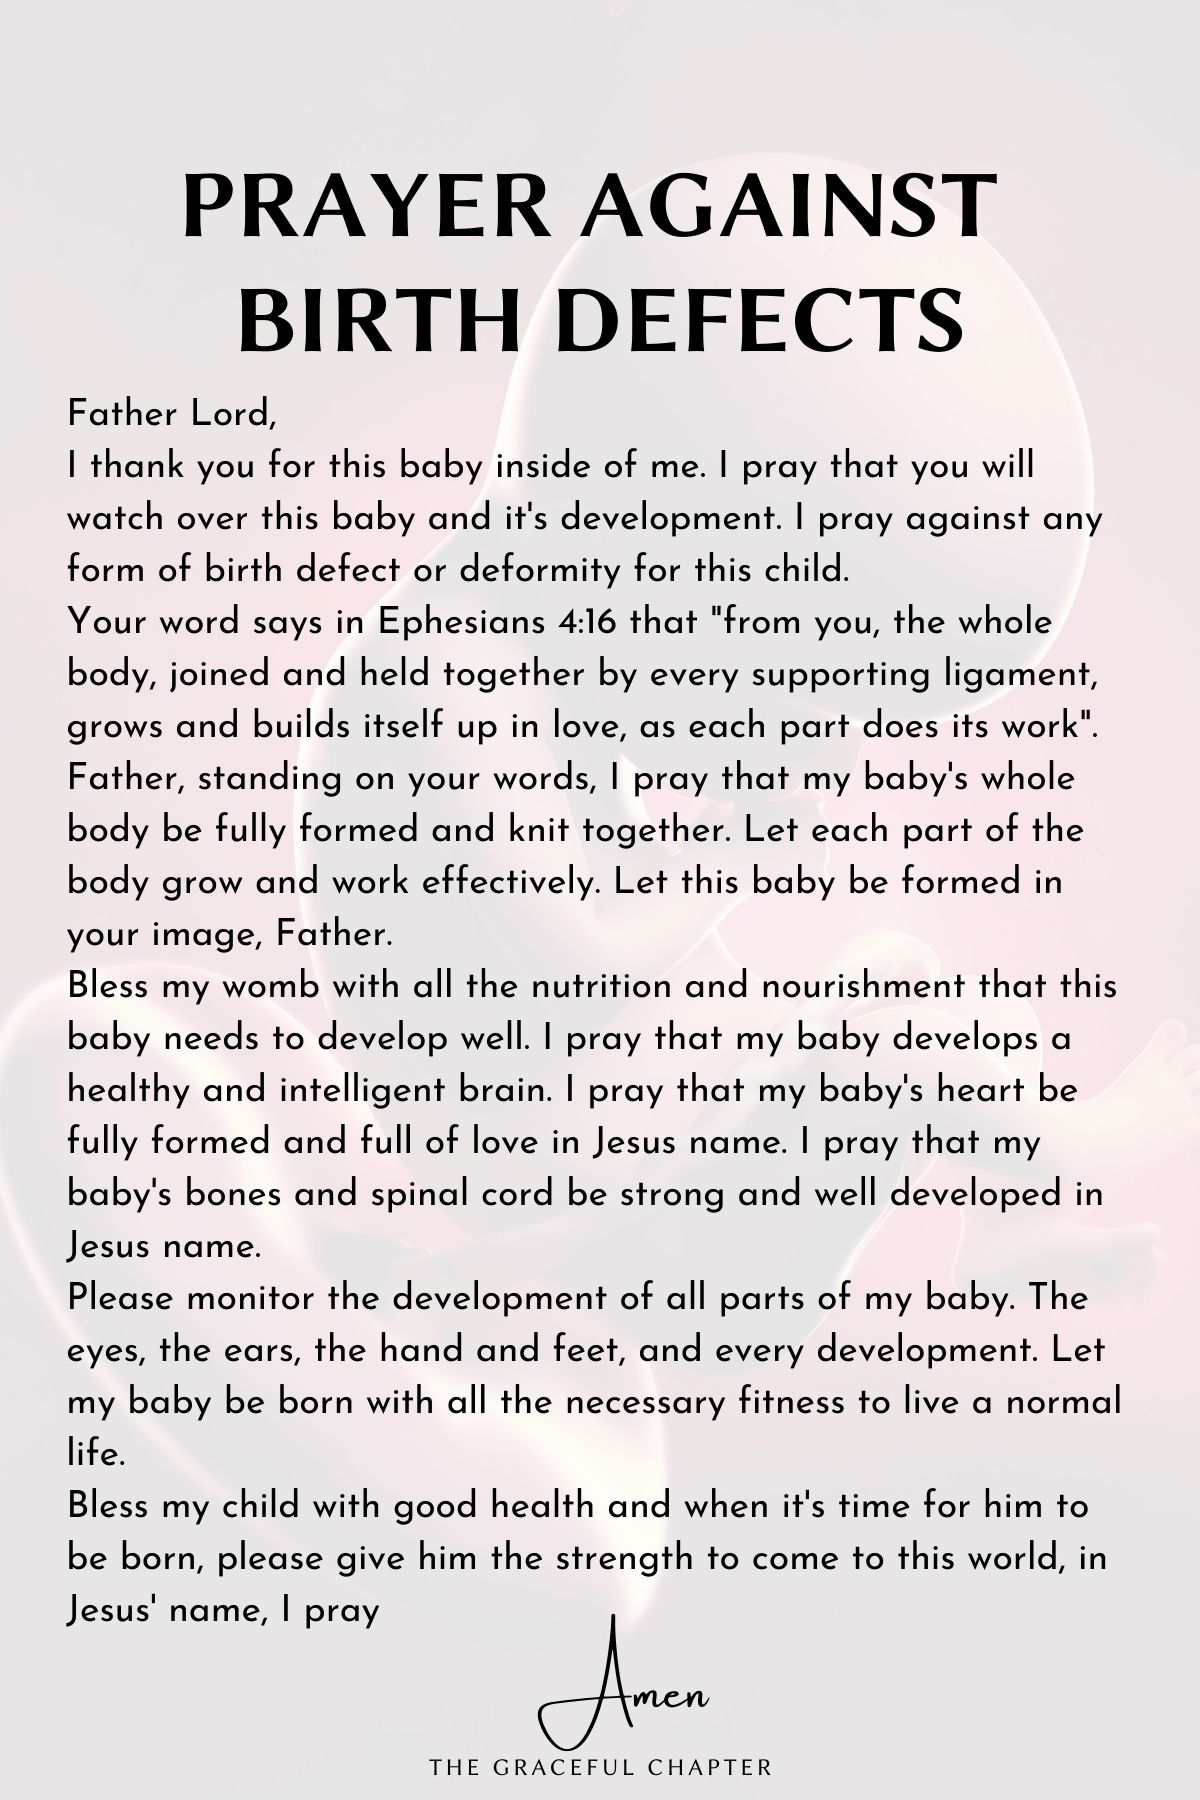 Prayer against birth defects